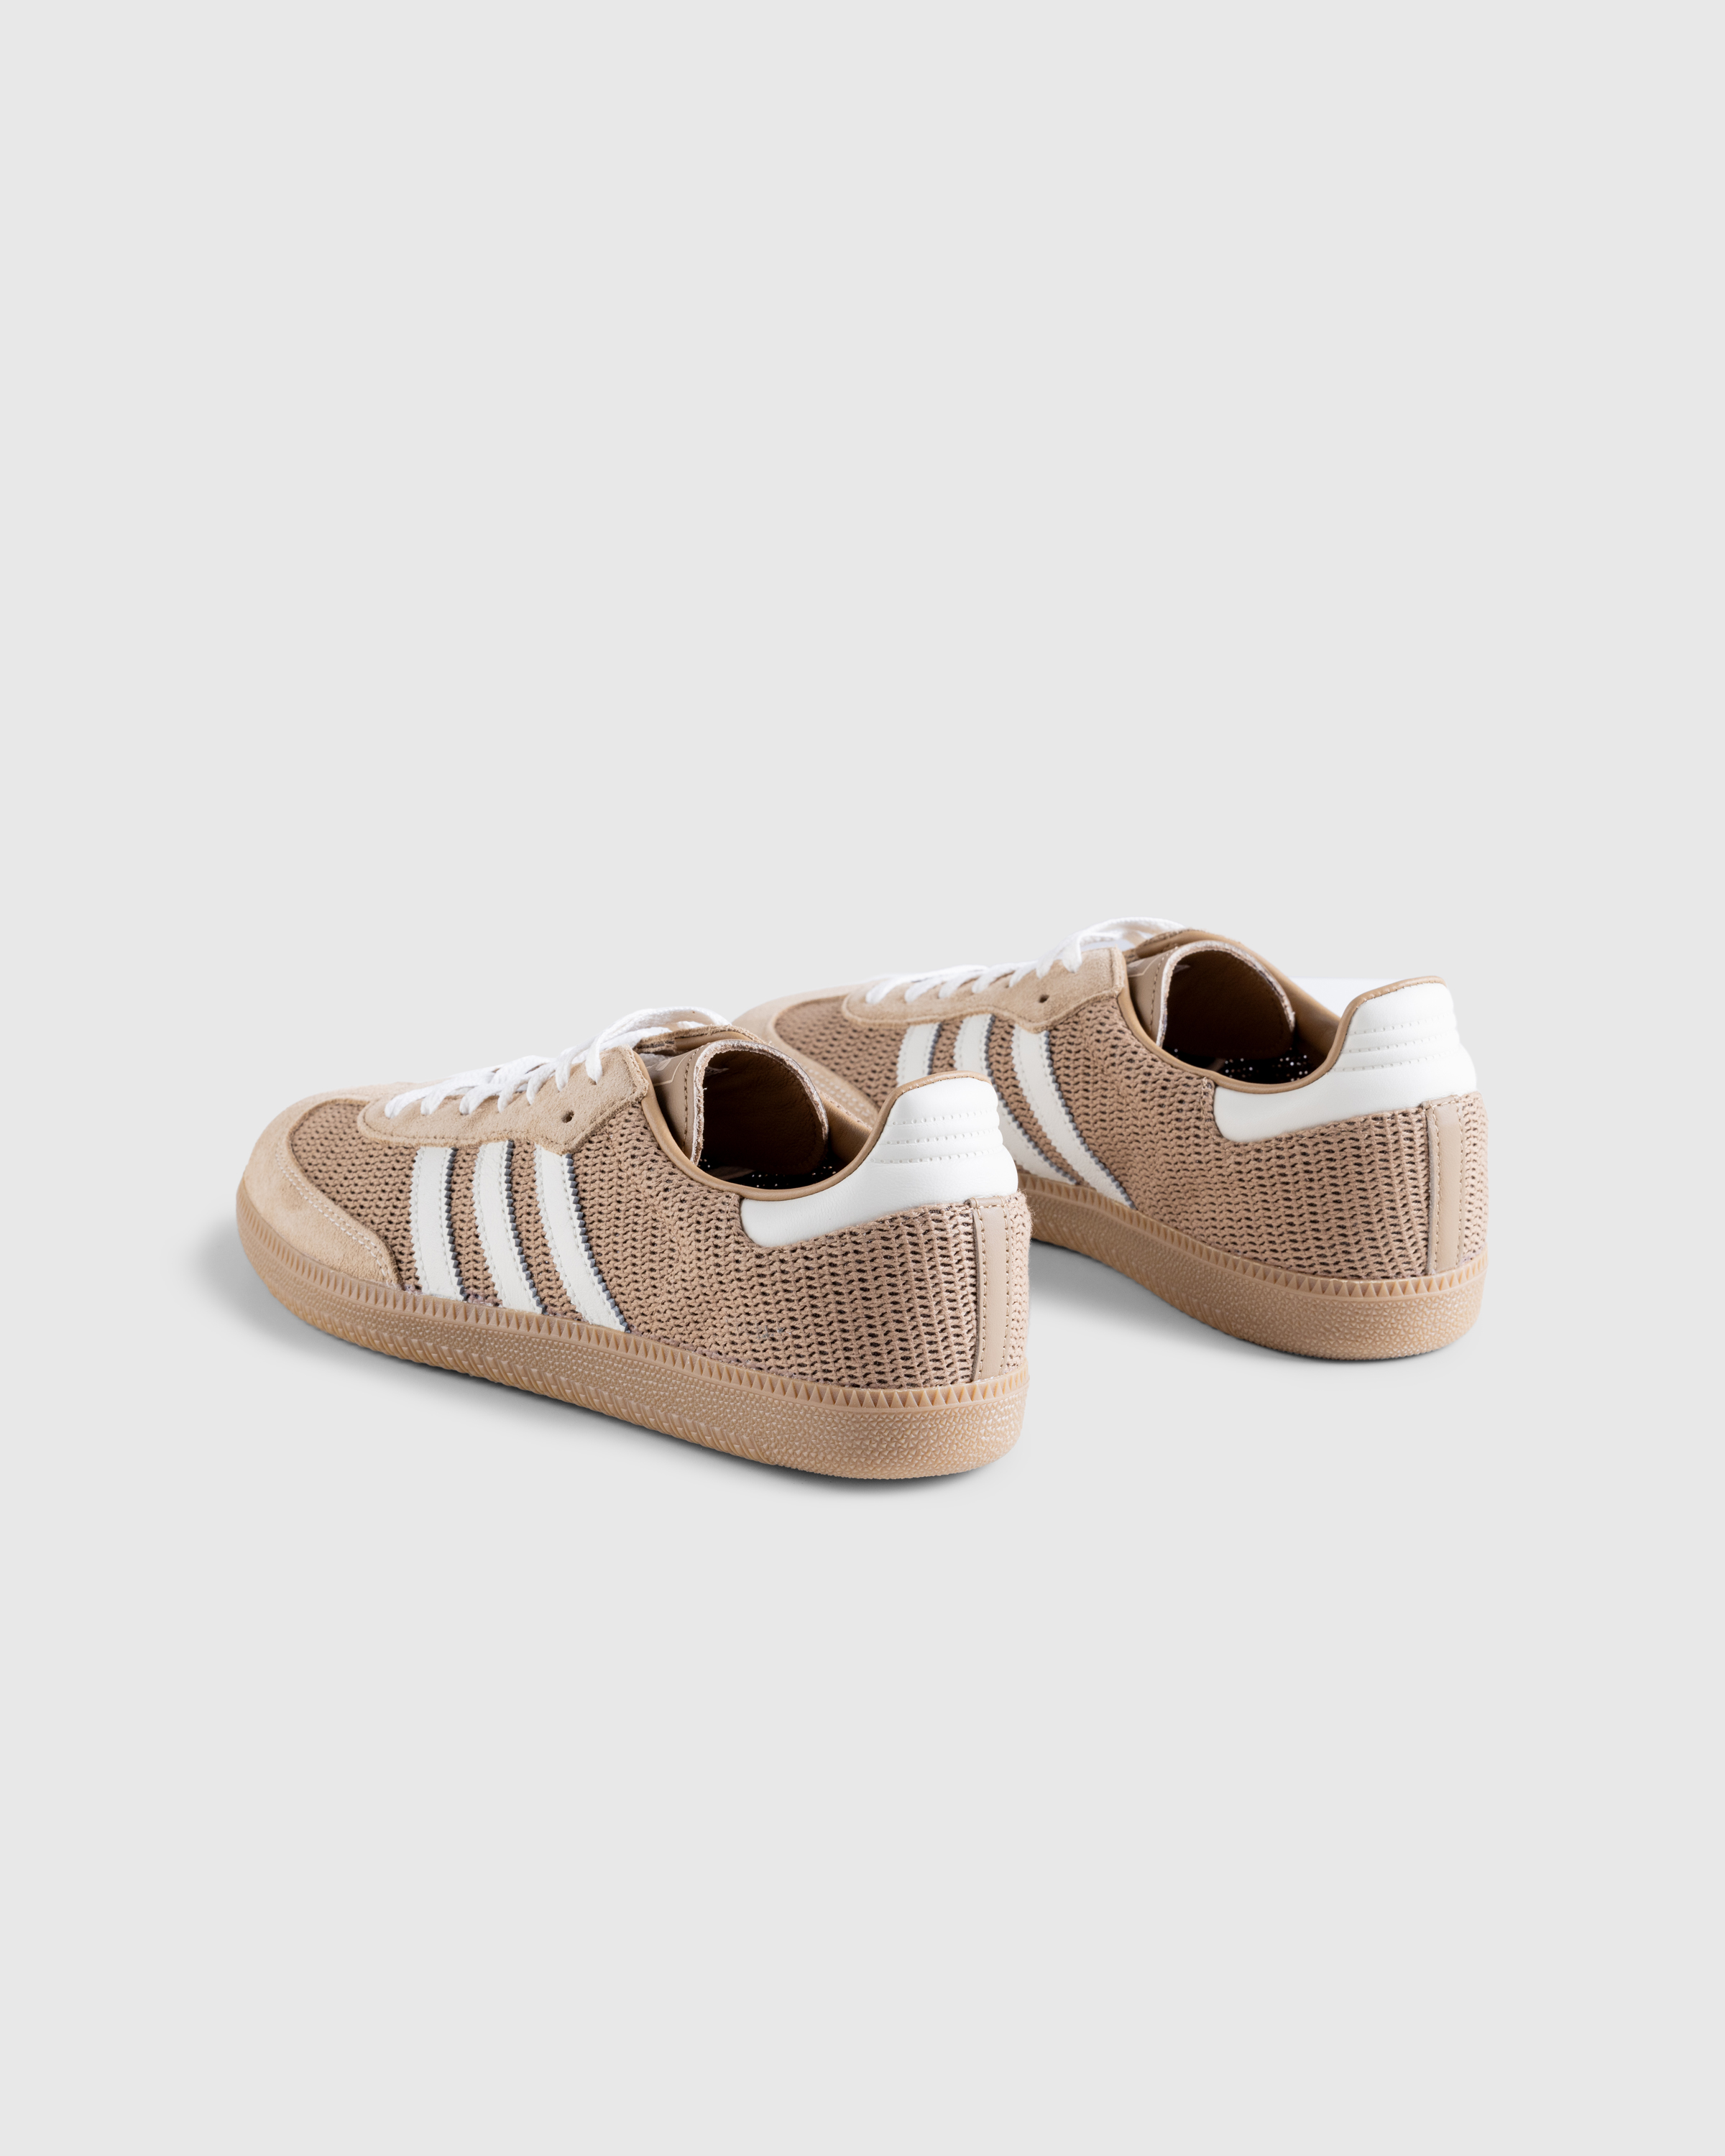 Adidas – Samba OG Cardboard - Sneakers - Brown - Image 4